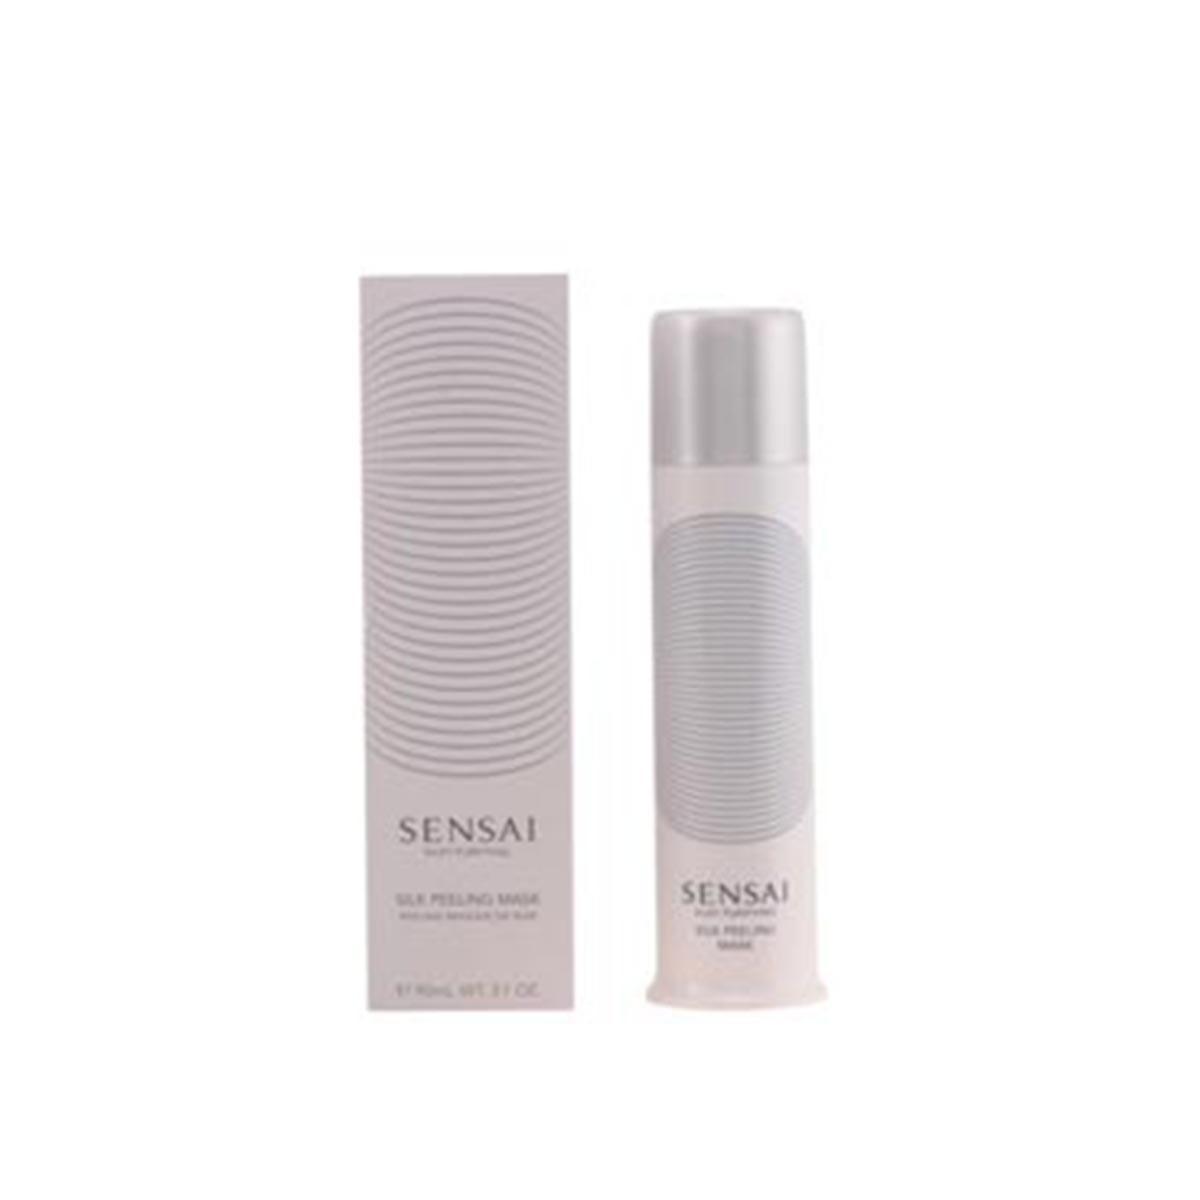 kanebo-sensai-silky-purifying-mascara-exfoliante90ml